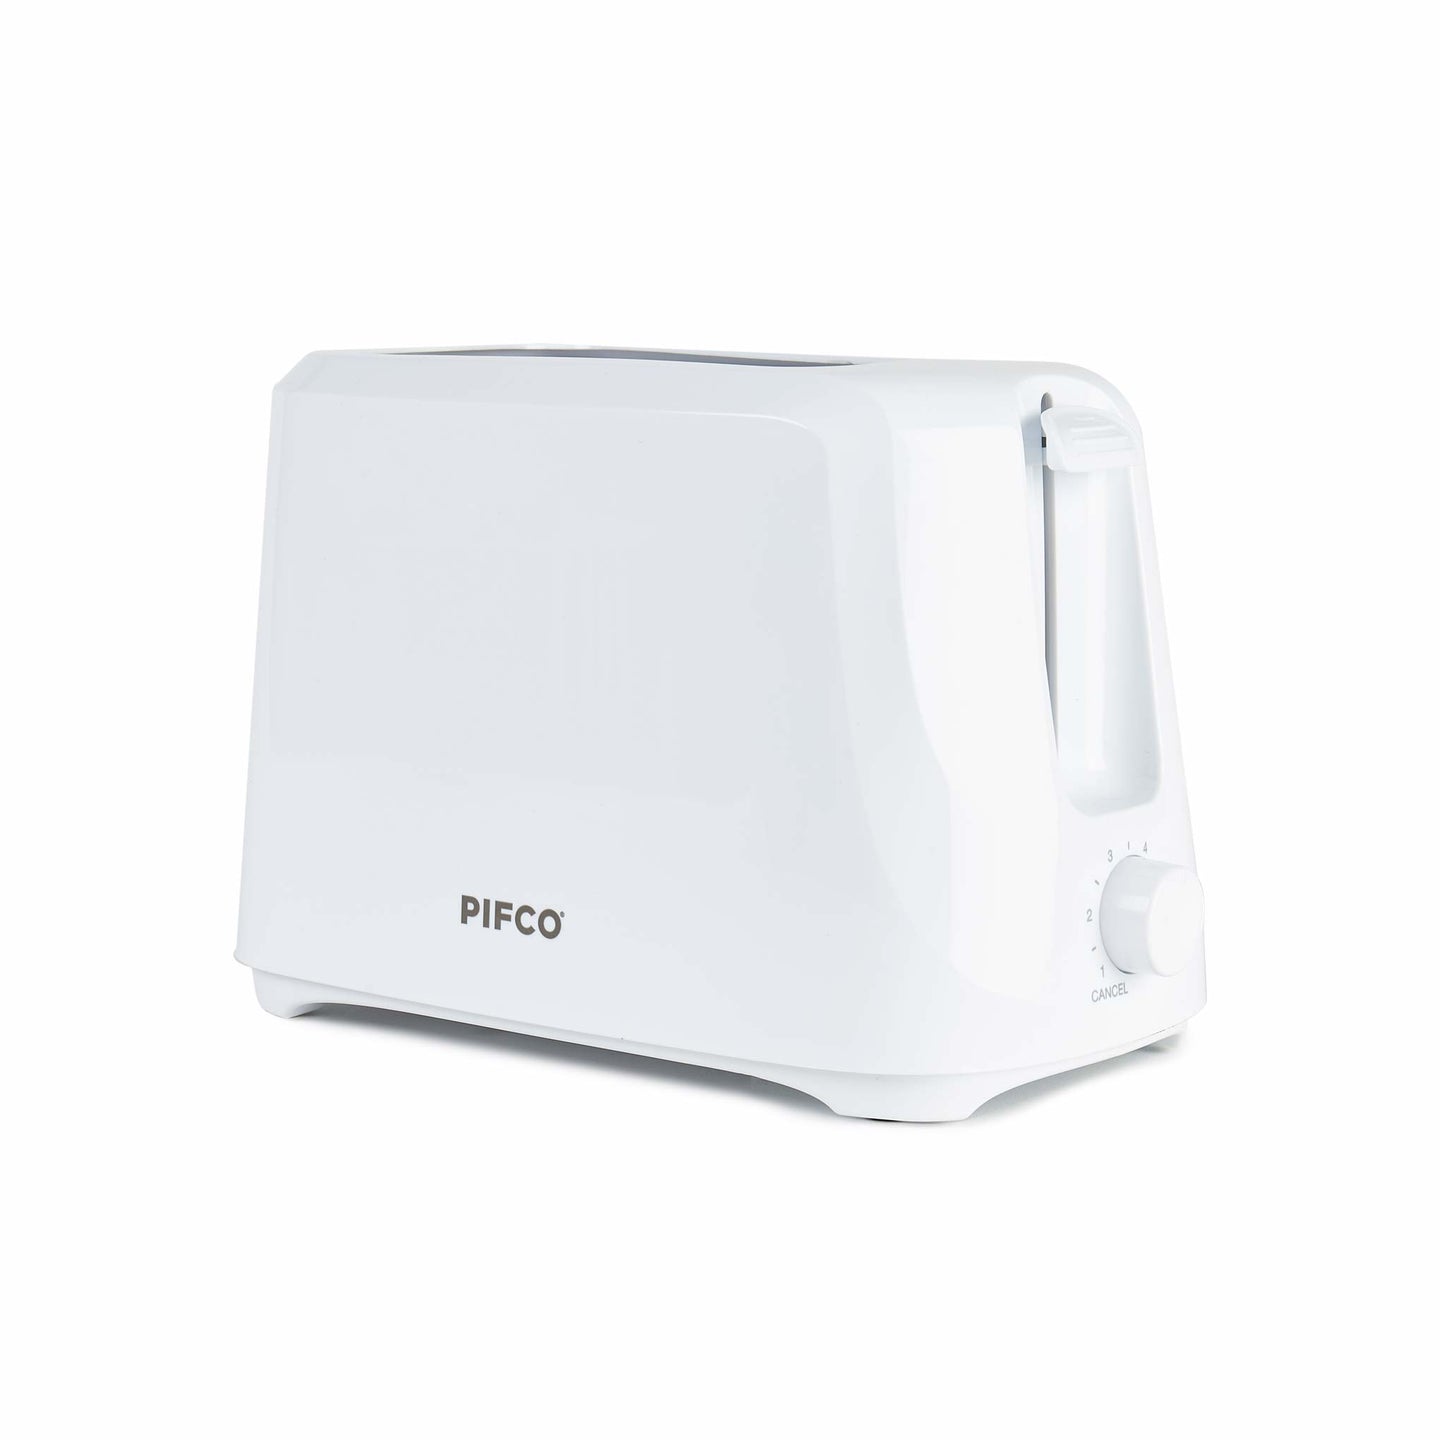 PIFCO Essentials White 2 Slice Toaster